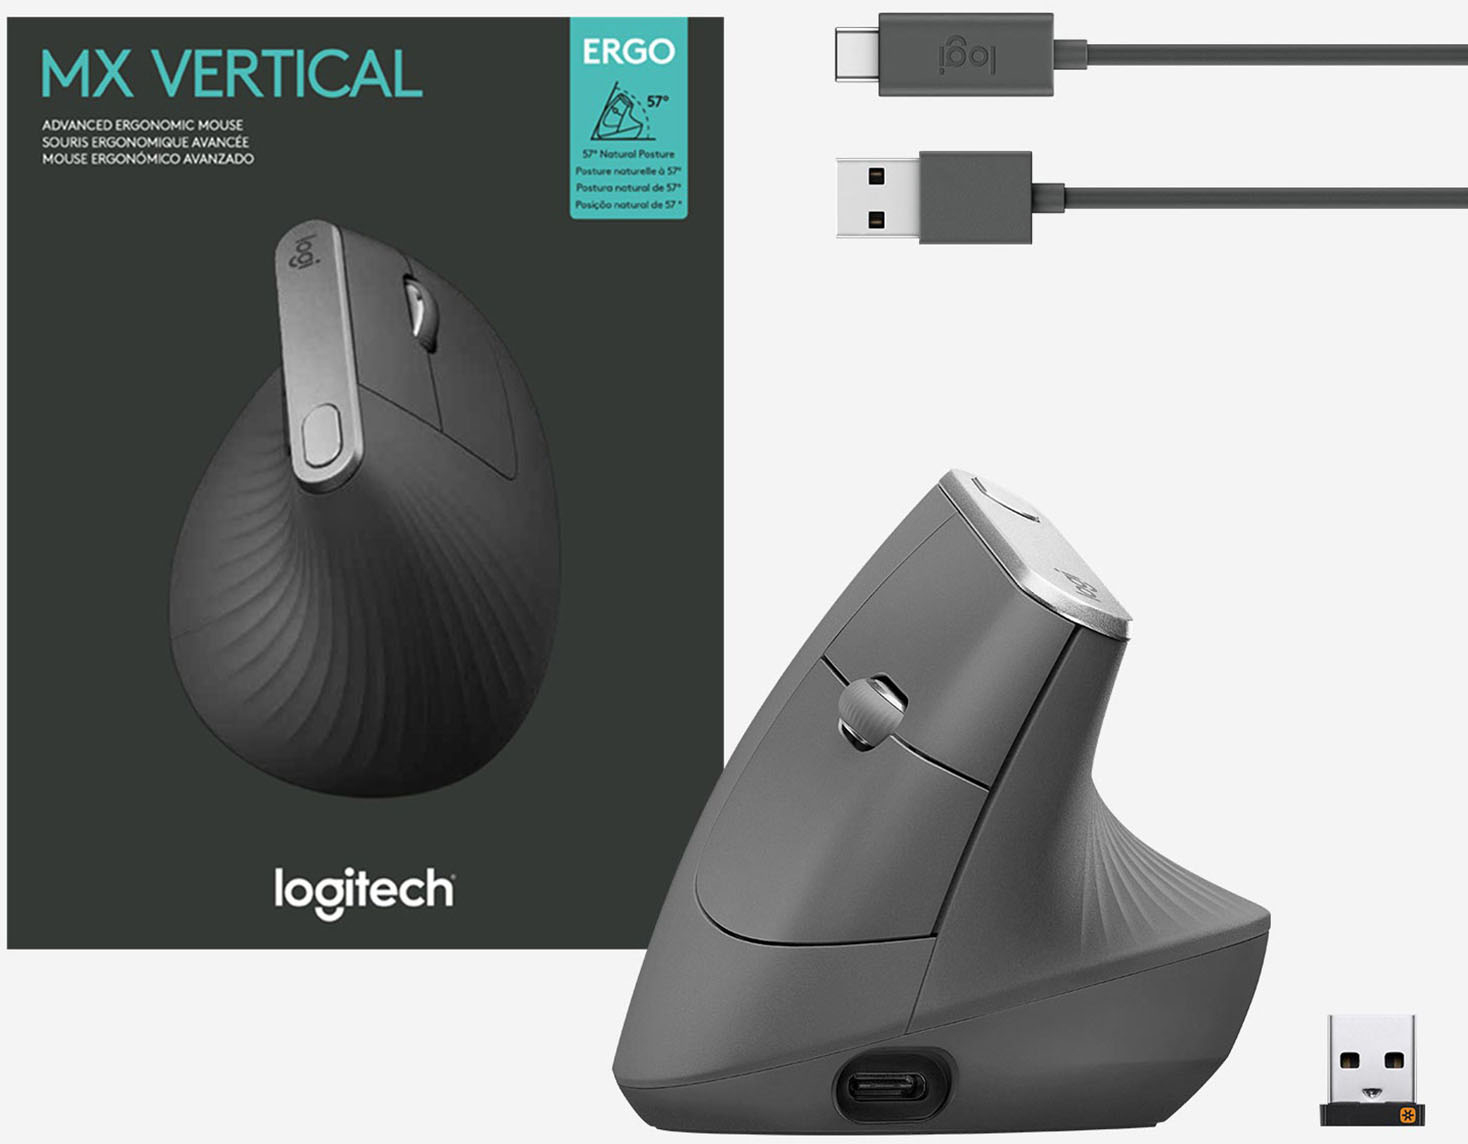 Logitech MX Vertical - Ergonomic vertical mouse in practical test